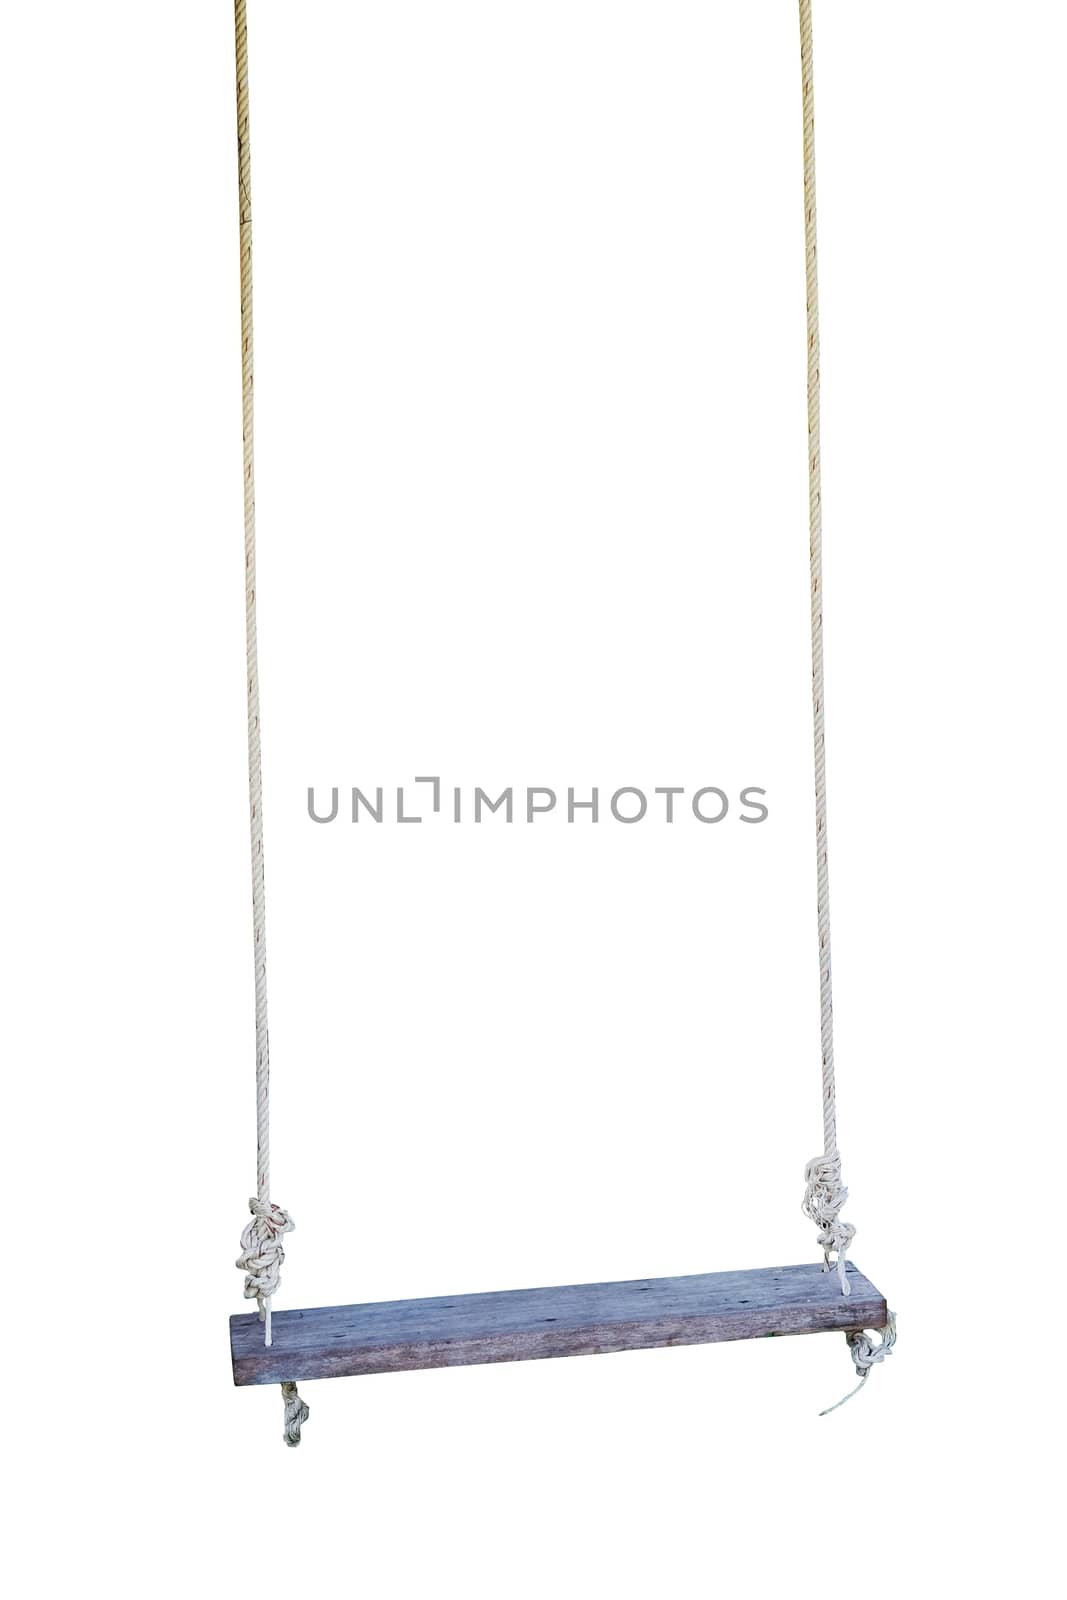 Wood swing Isolated on white background by Surasak